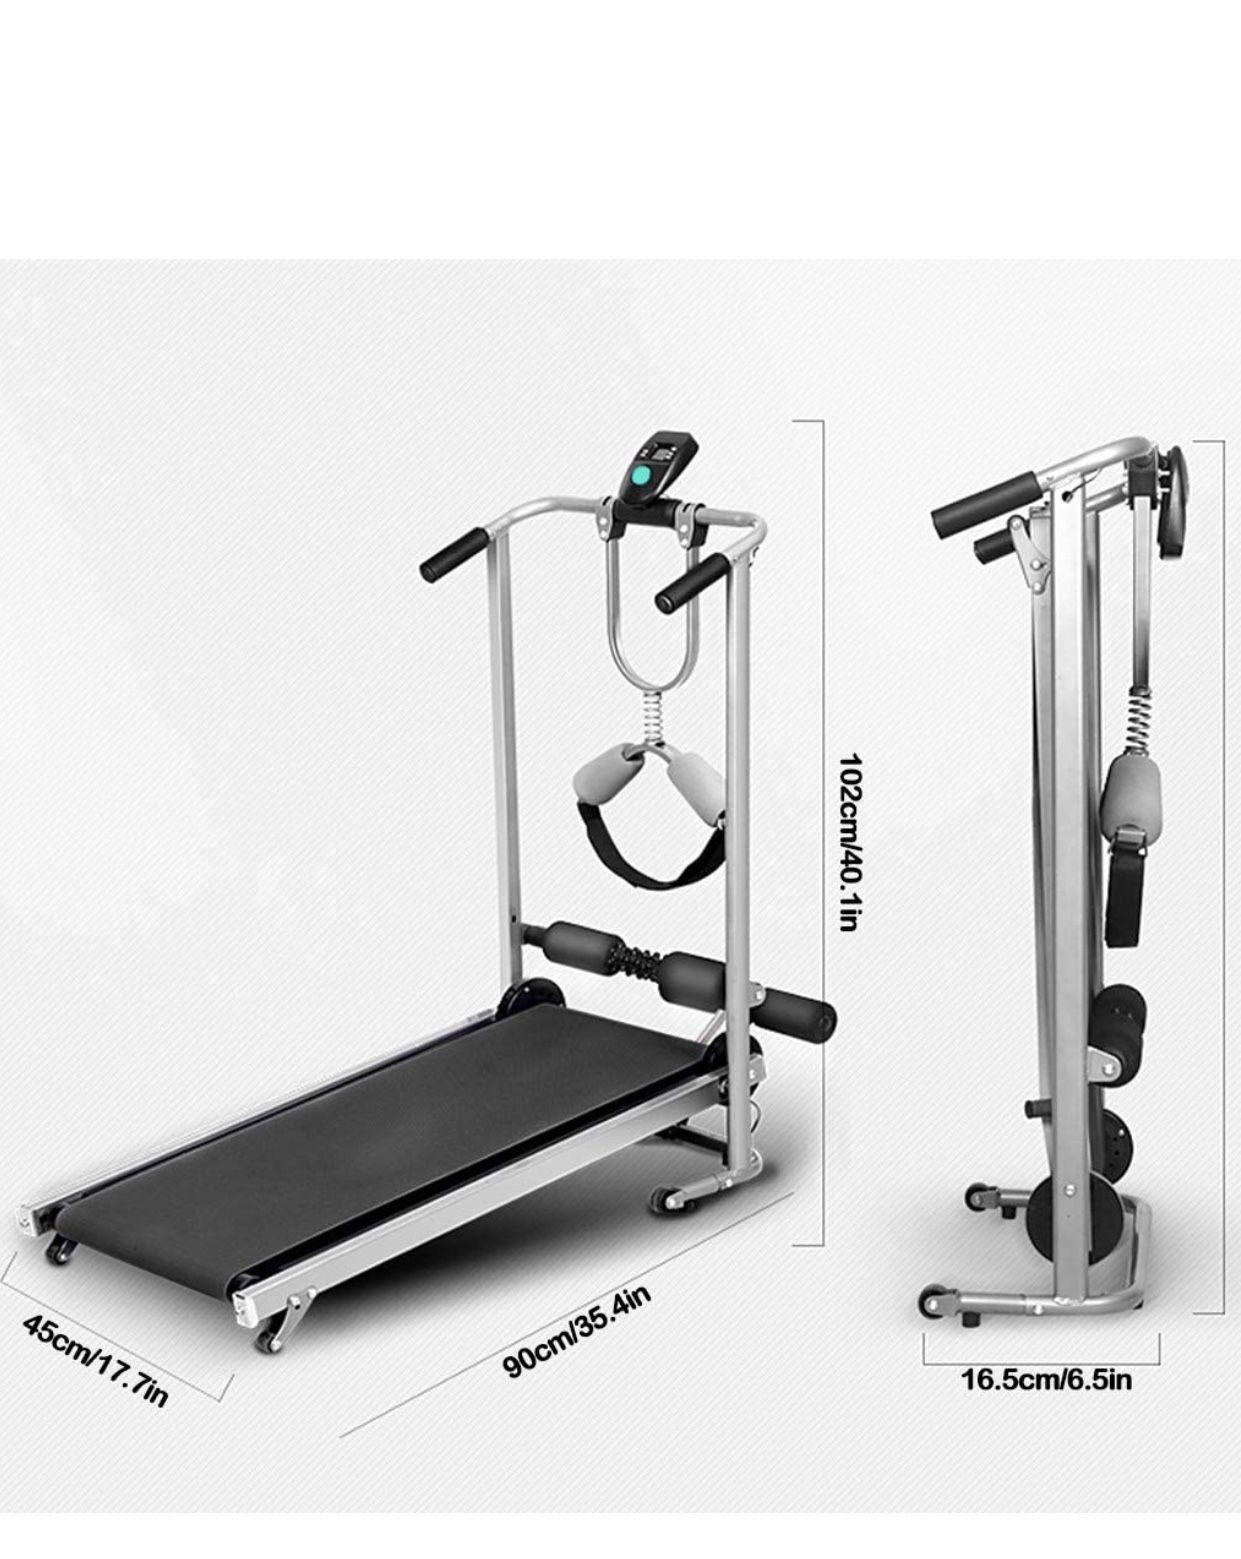 Treadmill ( caminadora)